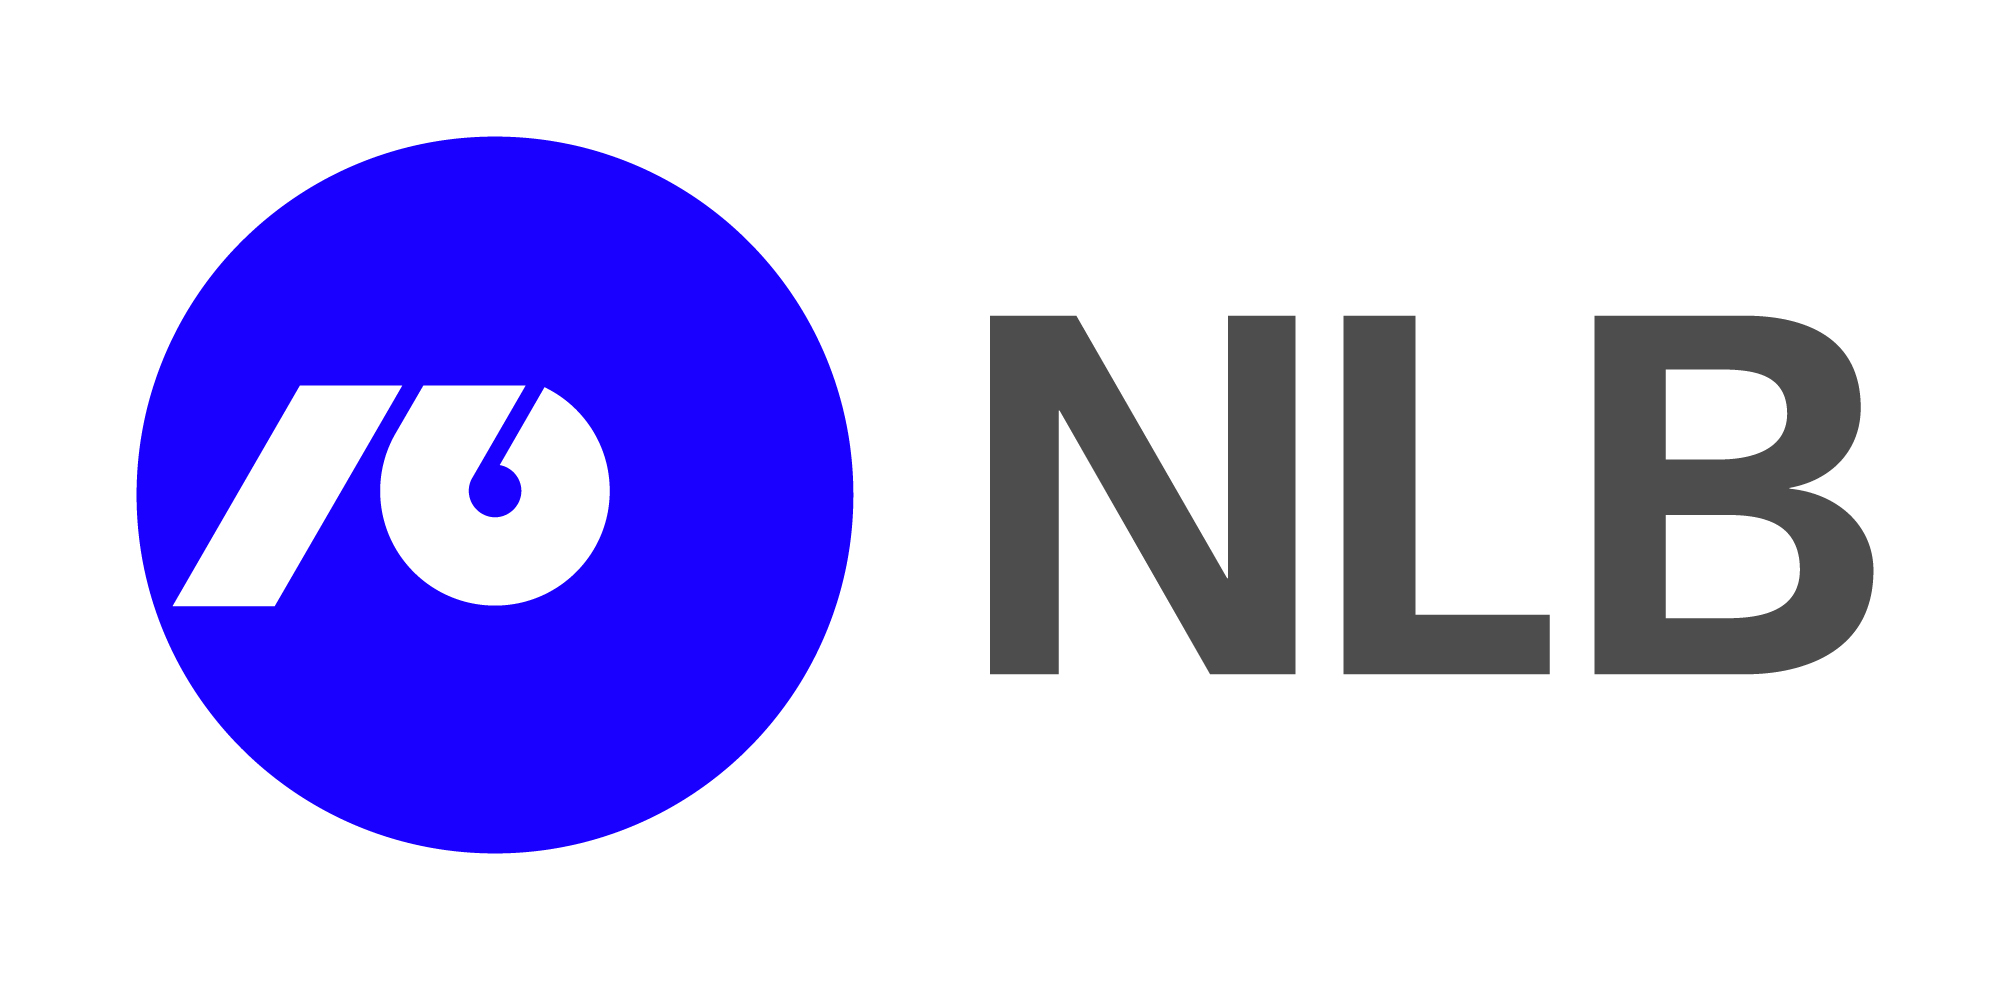 NLB logo